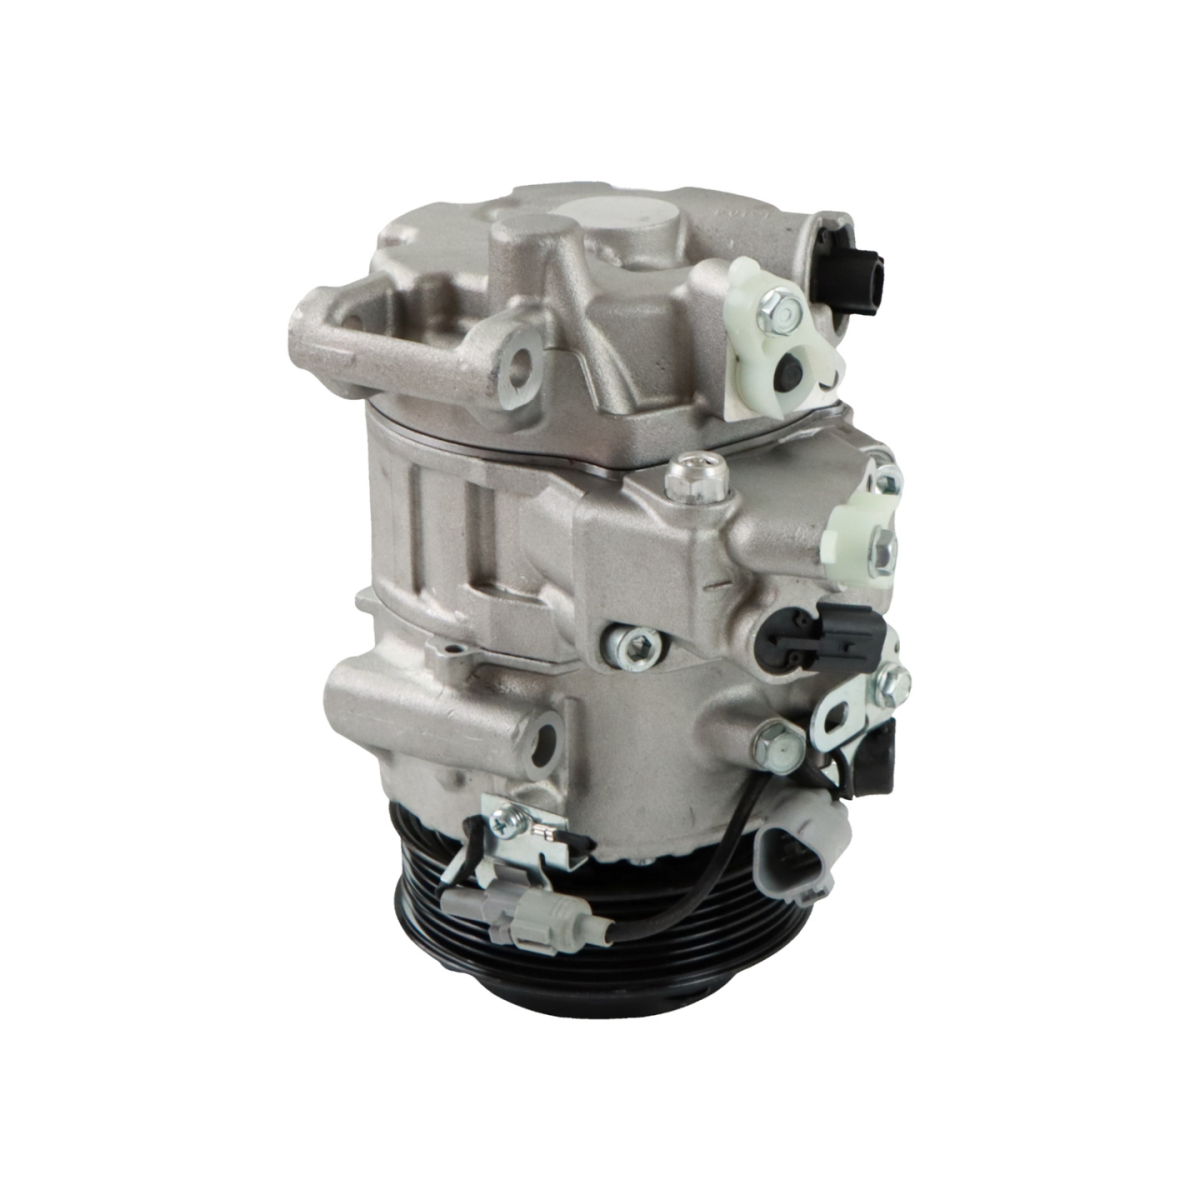 Daysyore® AC Compressor for Toyota Sienna 3.5L 2011-2016 CO 29042C 157369 98315 4711017 6512814